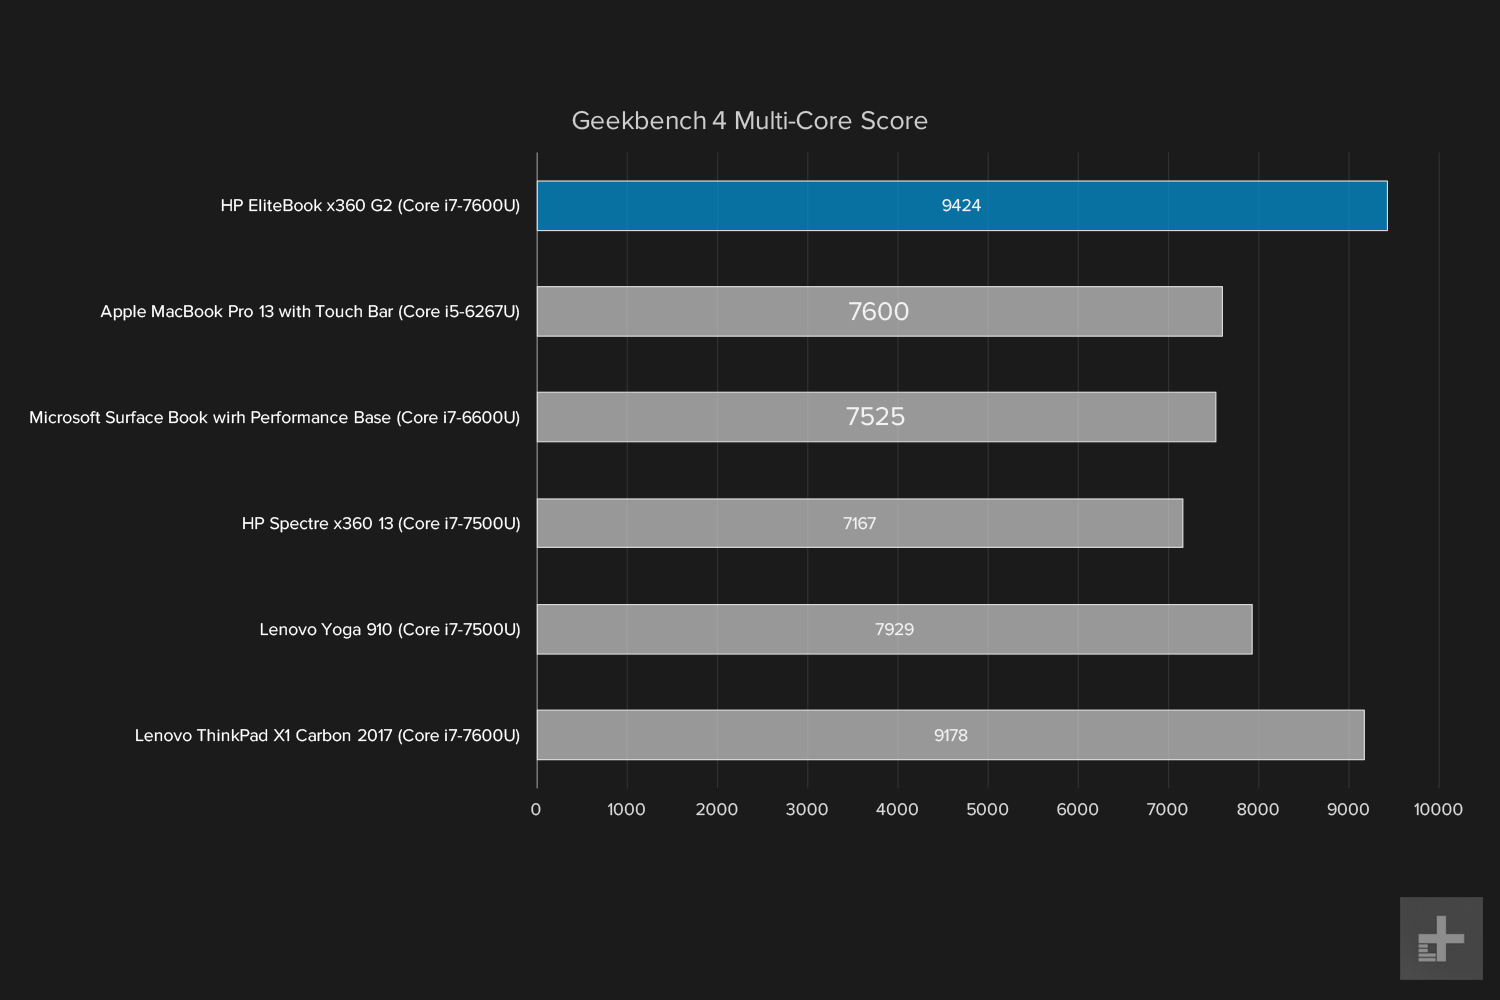 hp elitebook x360 g2 review geekbench multicore graph